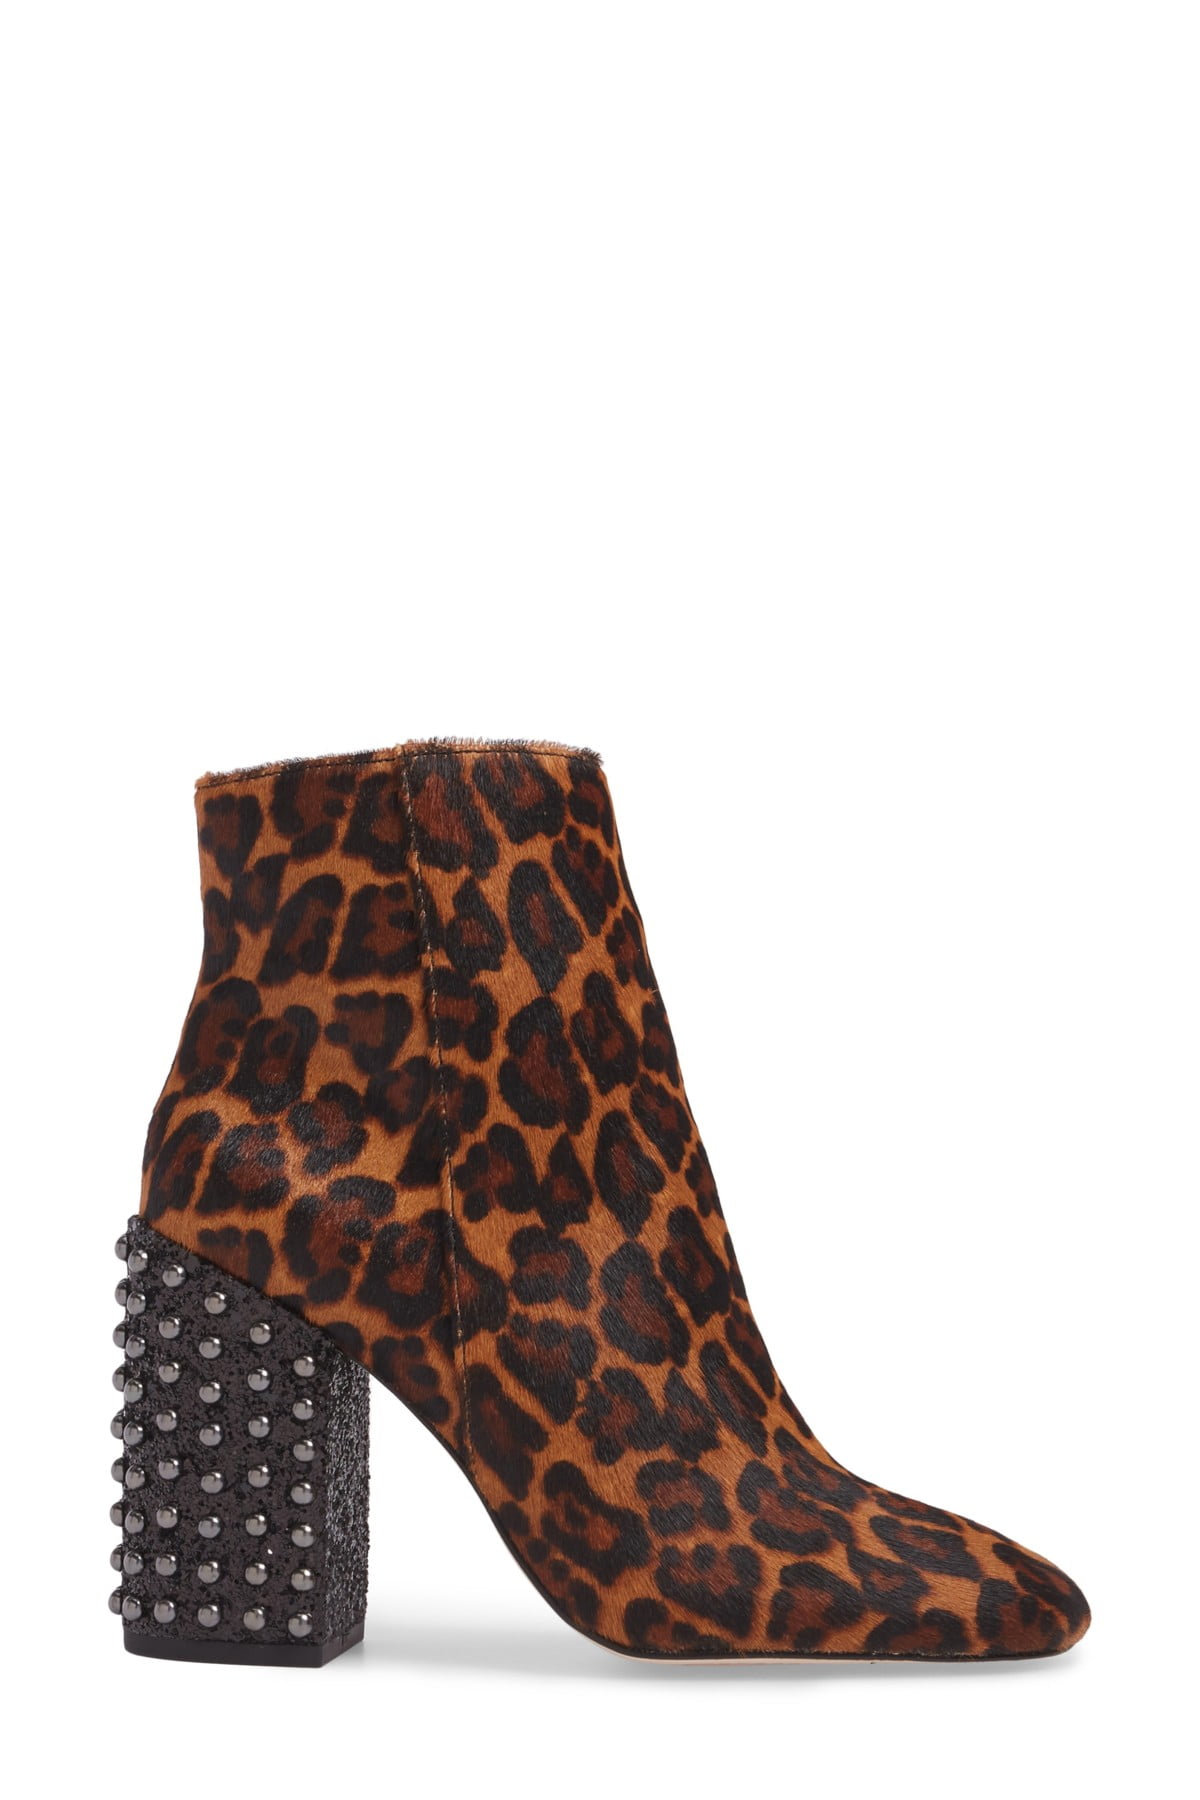 Jessica Simpson Leopard Print Venni2 Calf Hair Ankle Boots 